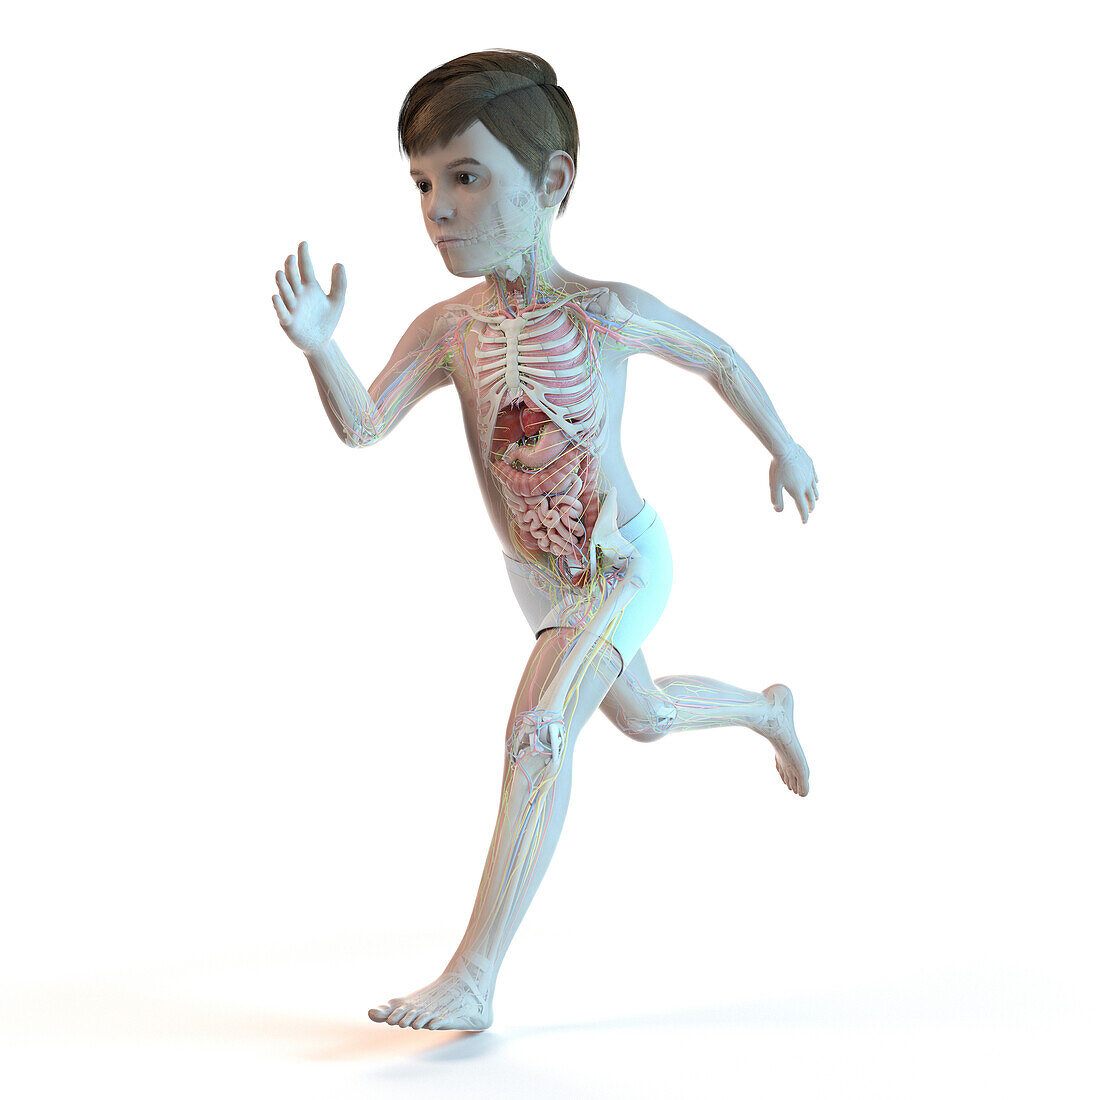 Illustration of a boy's anatomy